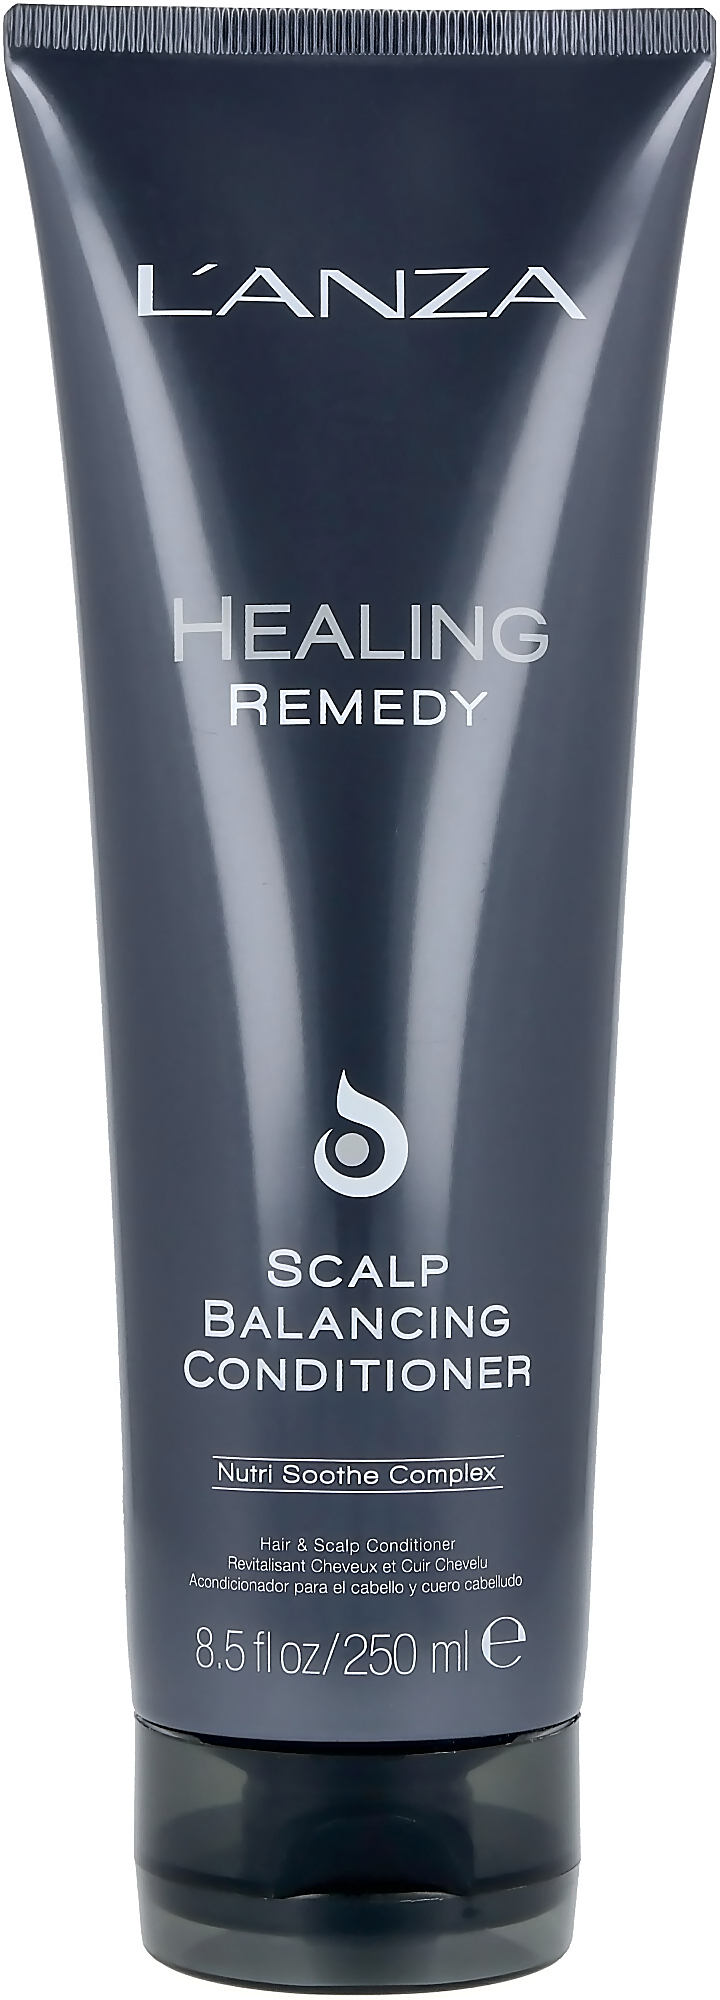 Lanza Healing Remedy Scalp Balancing Conditioner